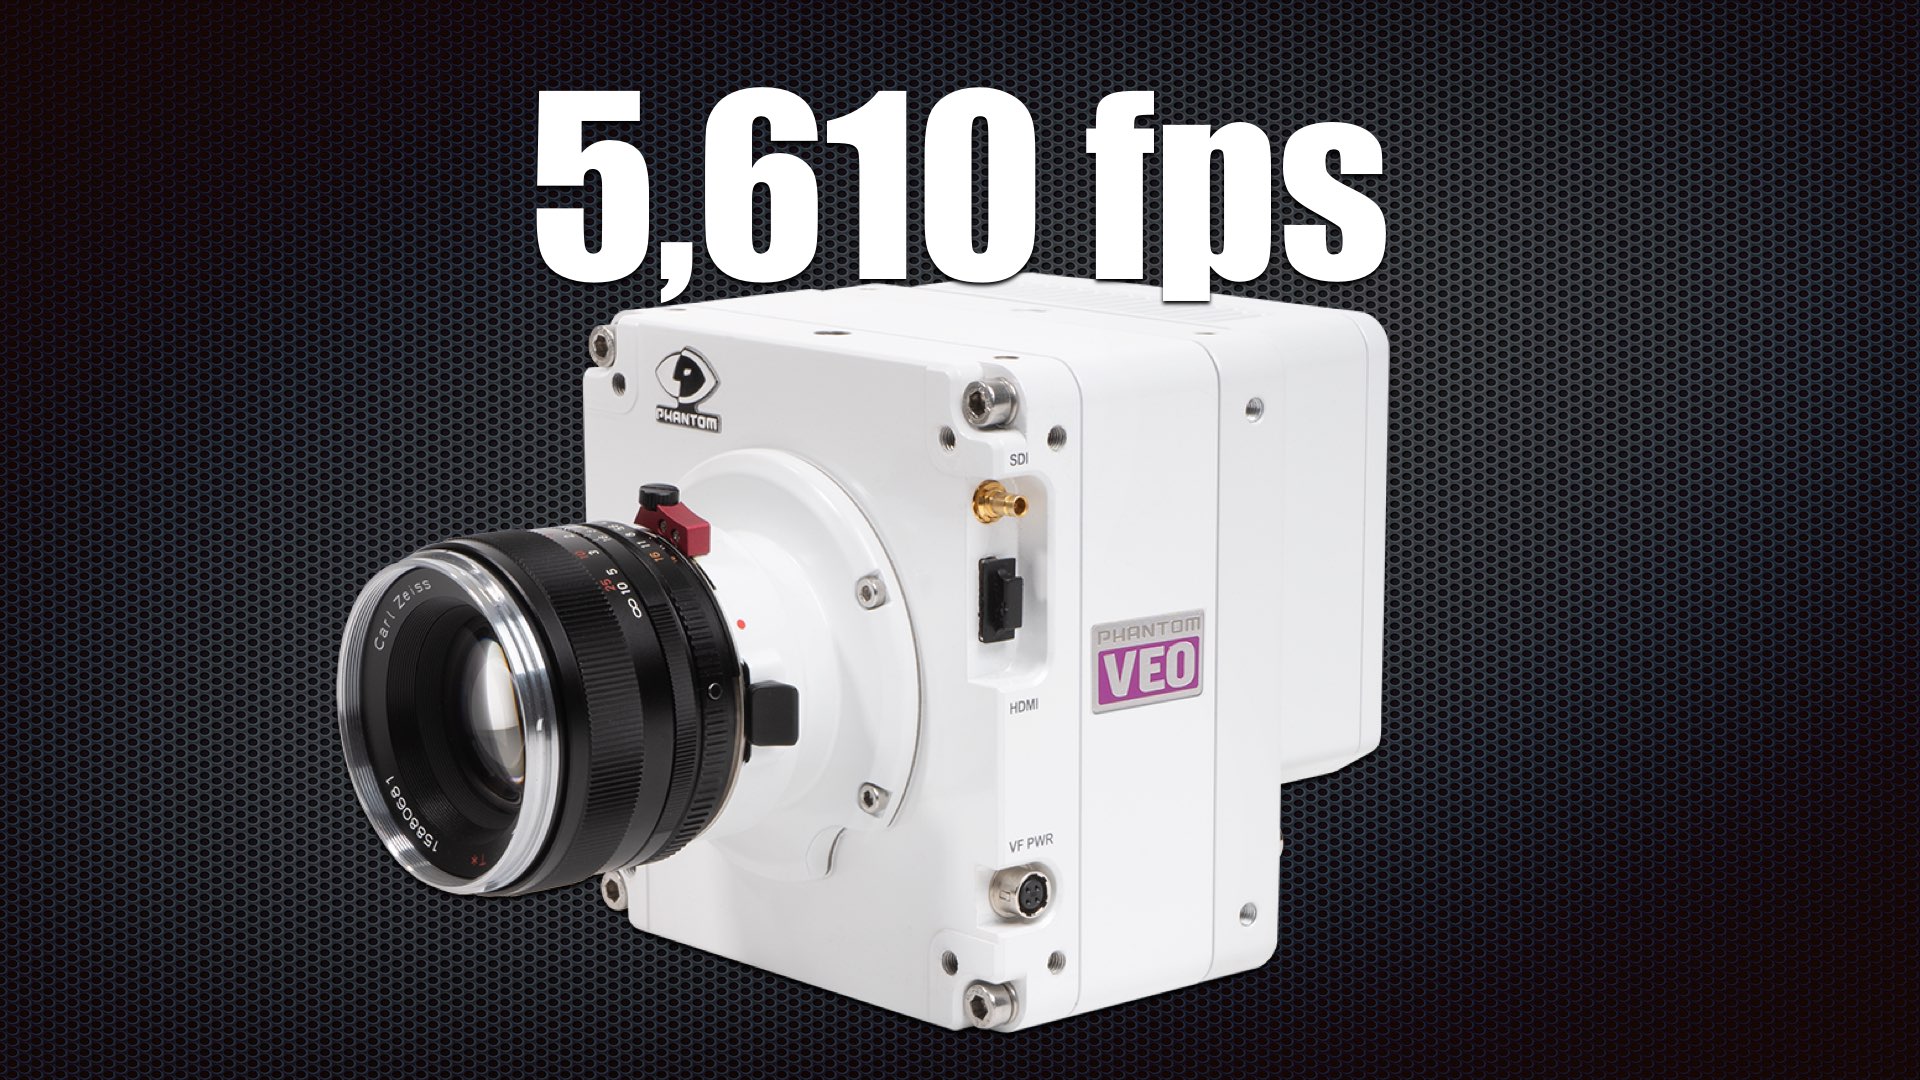 Meet the new Phantom VEO 610: HD Resolution at 5,610 FPS